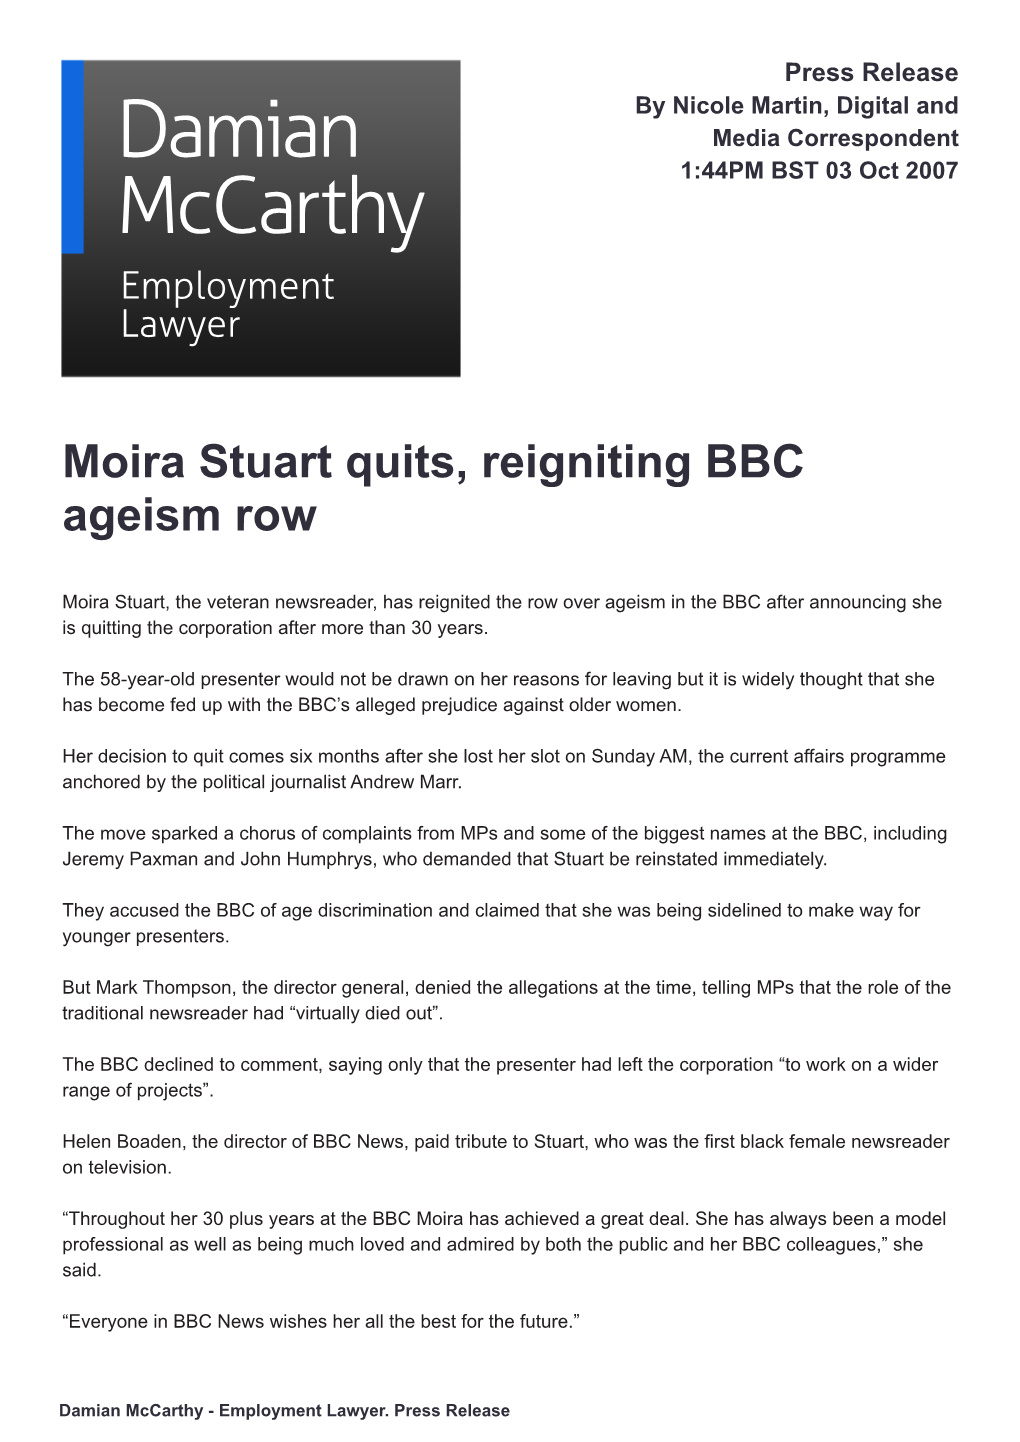 Moira Stuart Quits, Reigniting BBC Ageism Row